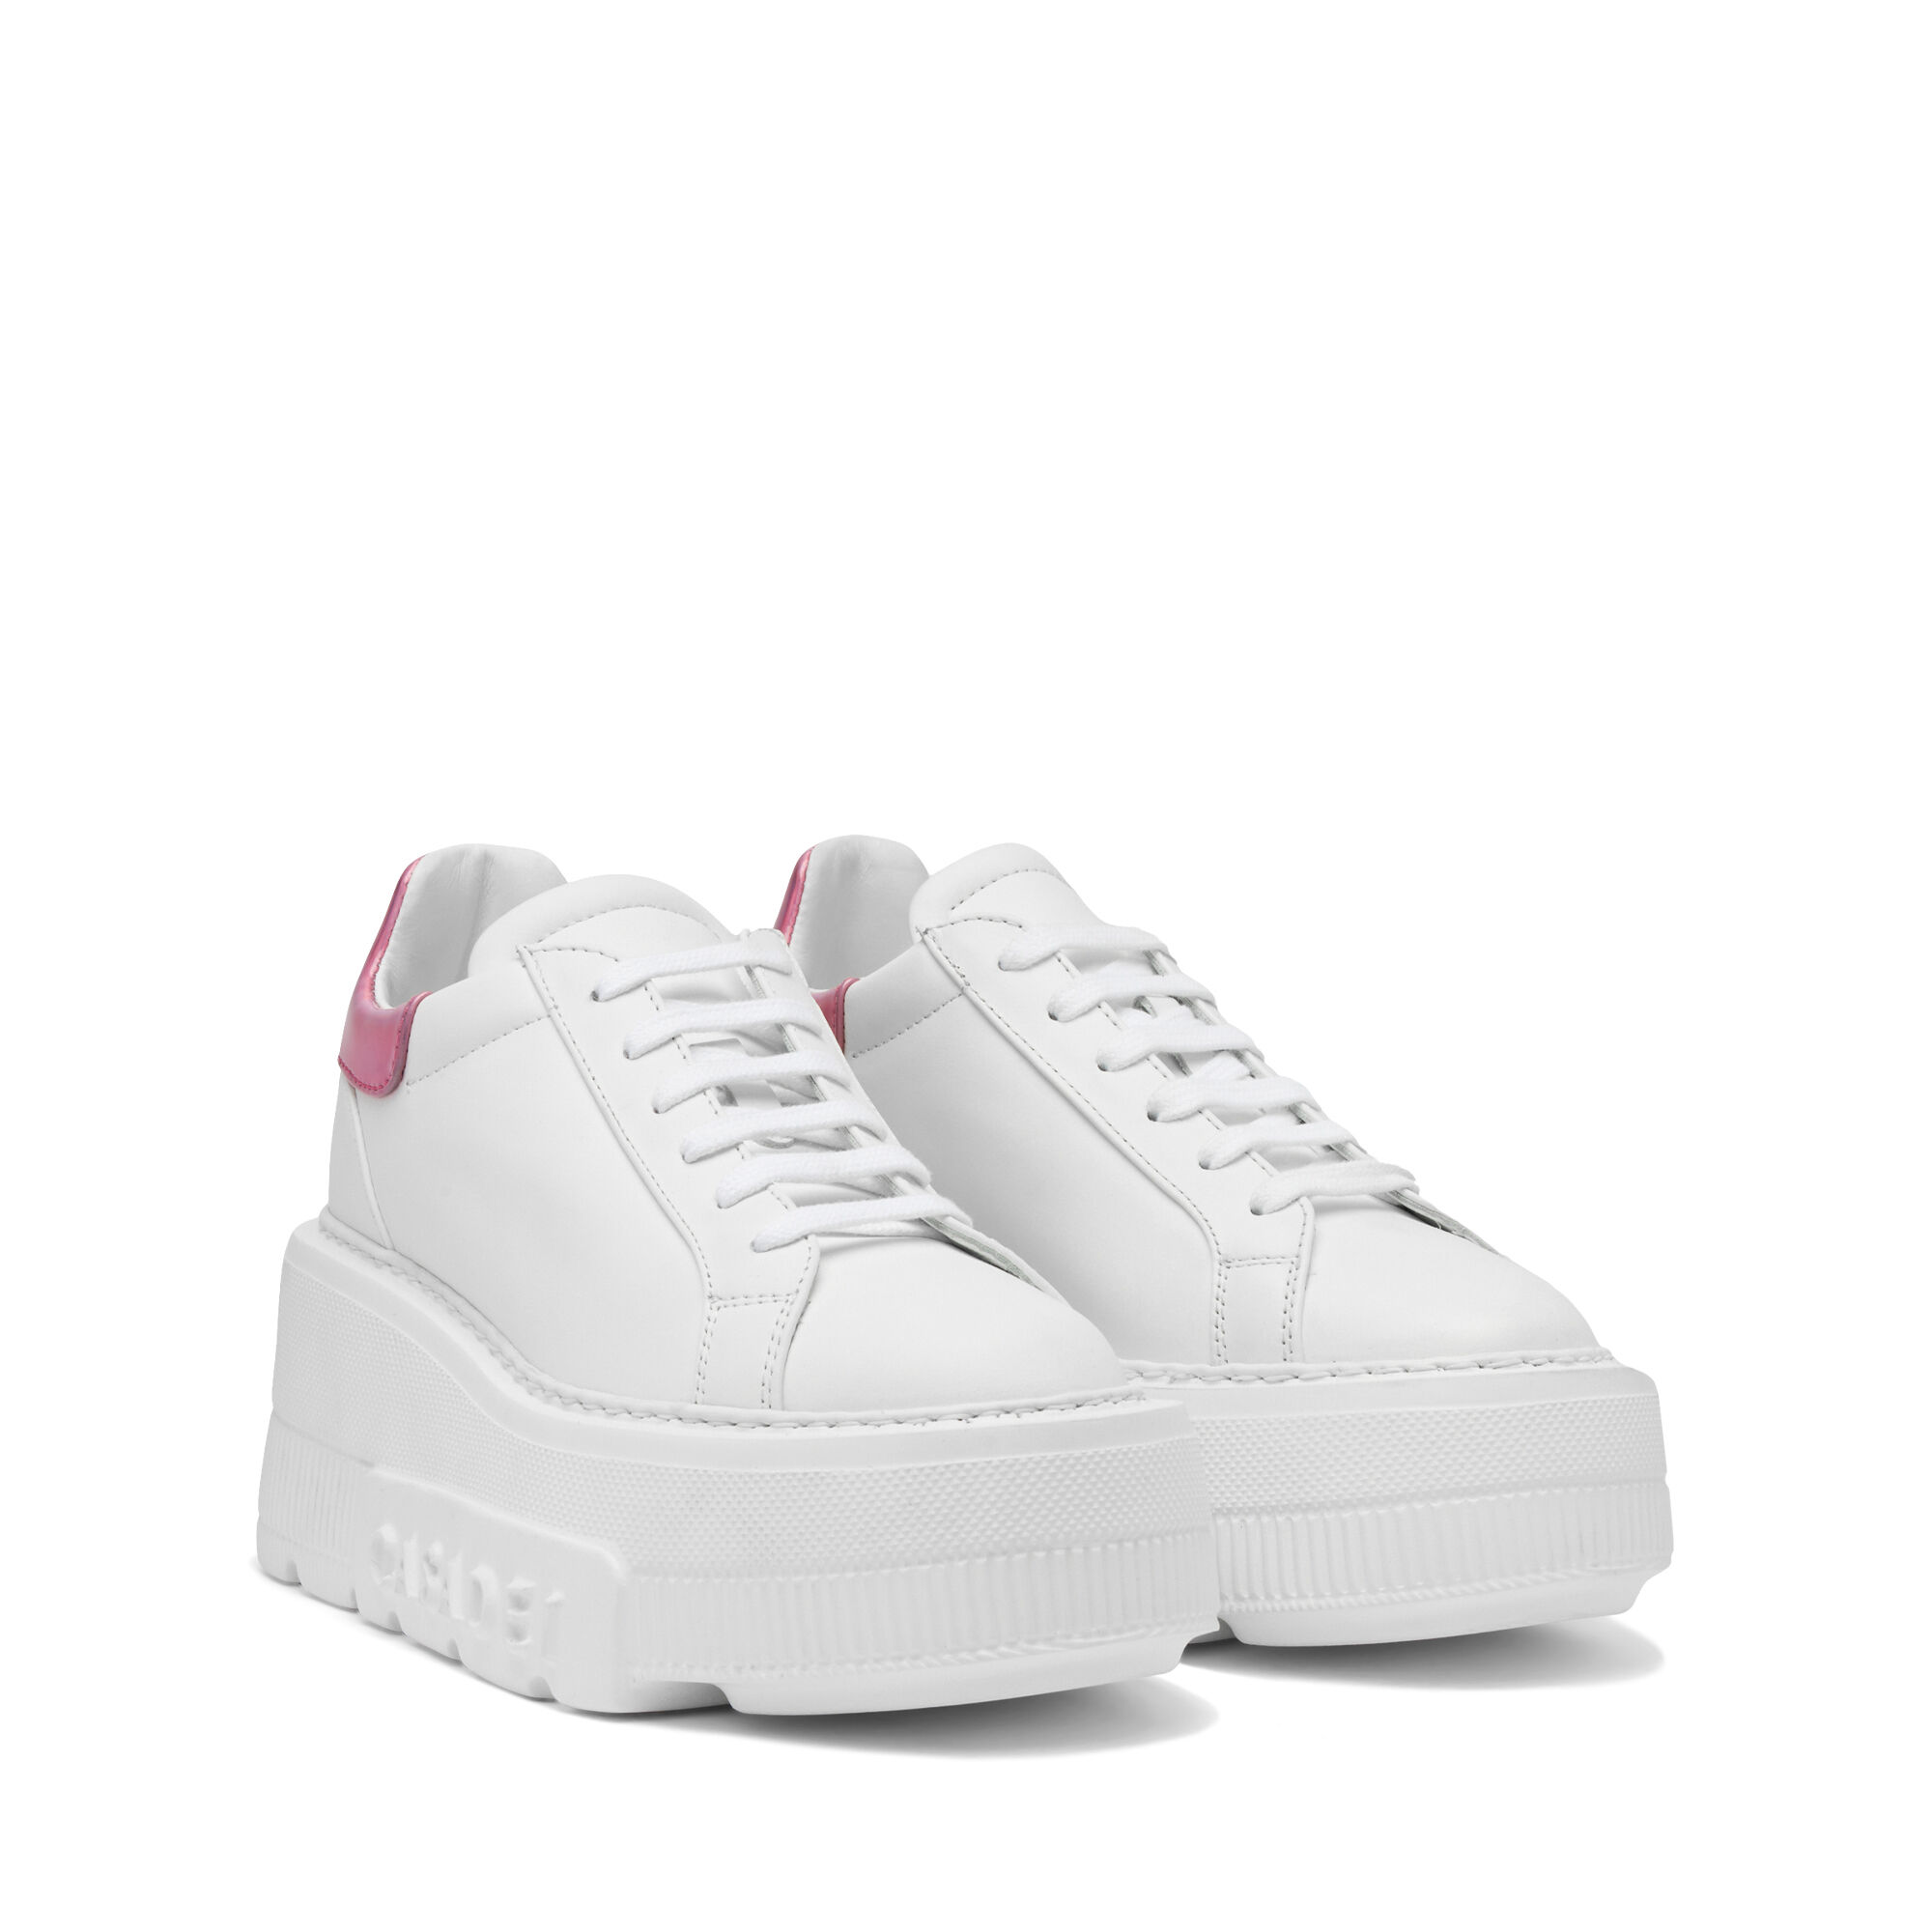 Nexus Flash Sneakers XXL Sole in White and Minou for Women | Casadei®